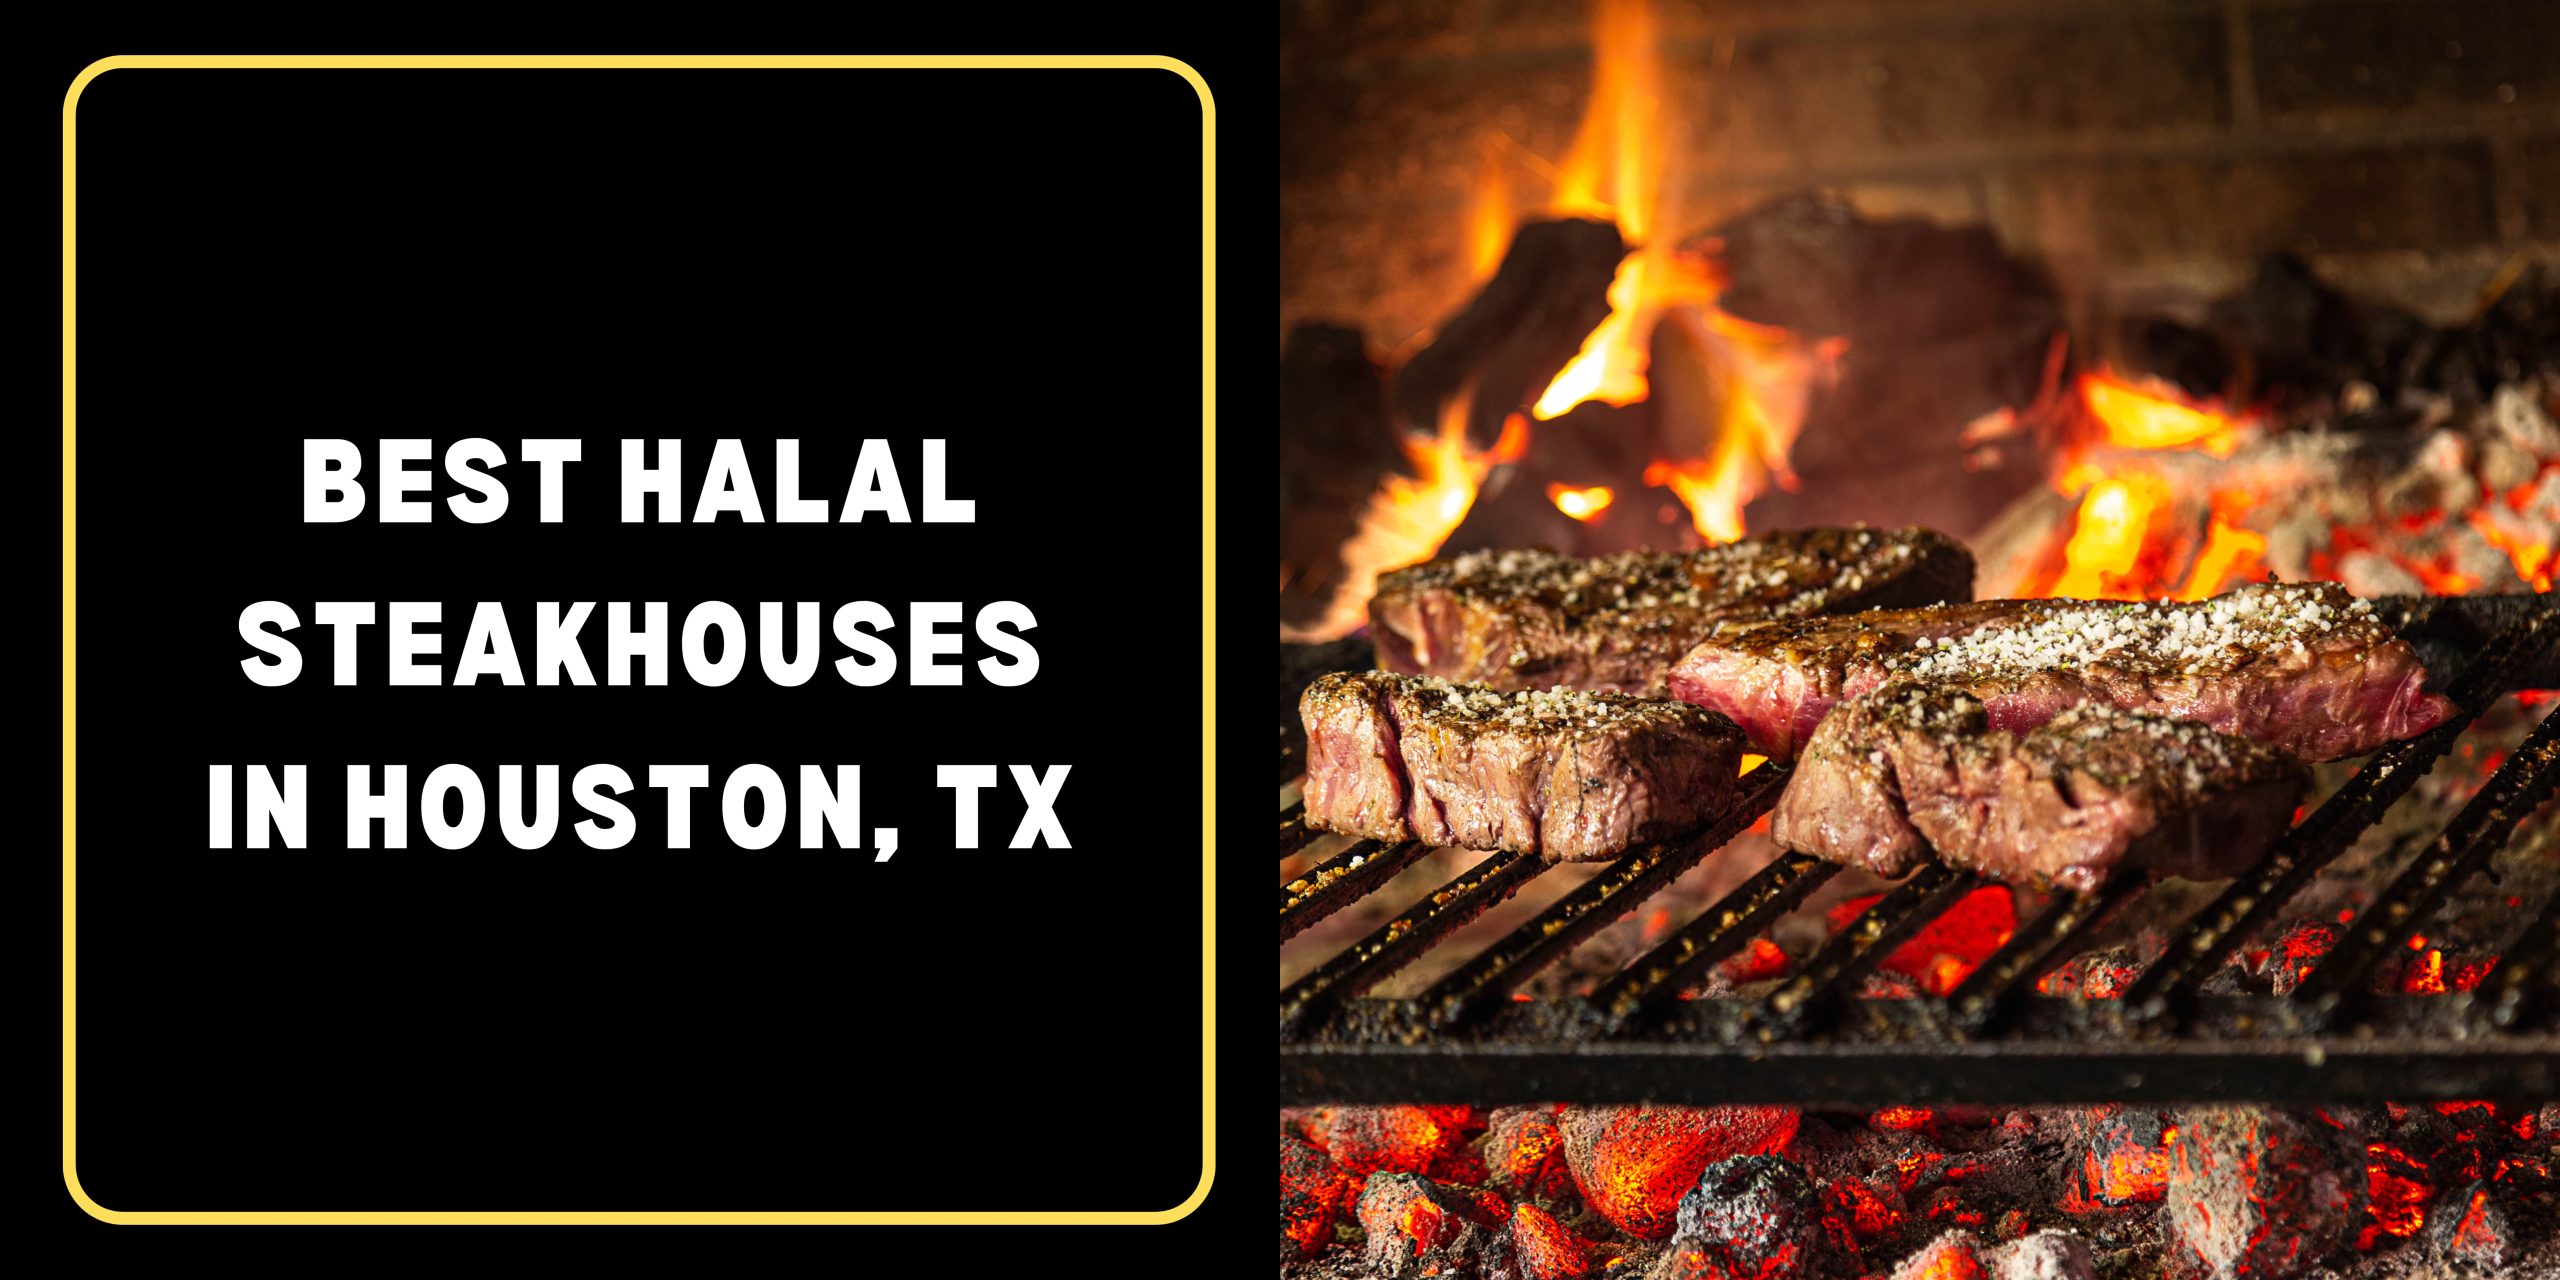 Best Halal Steakhouses in Houston, TX